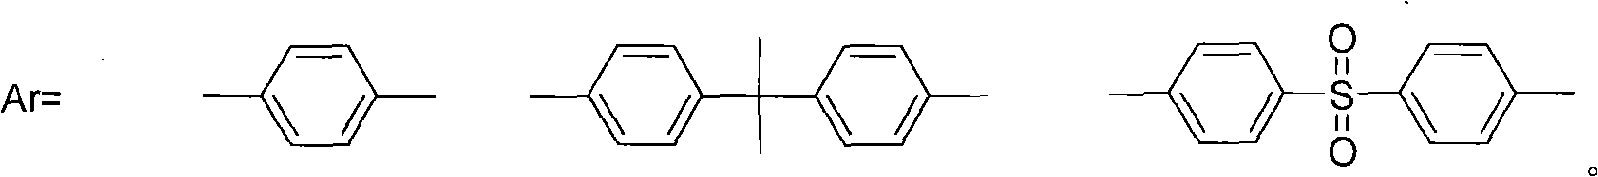 Preparation of polyphosphate flame retardant having dicyclic phosphoric acid ester structure